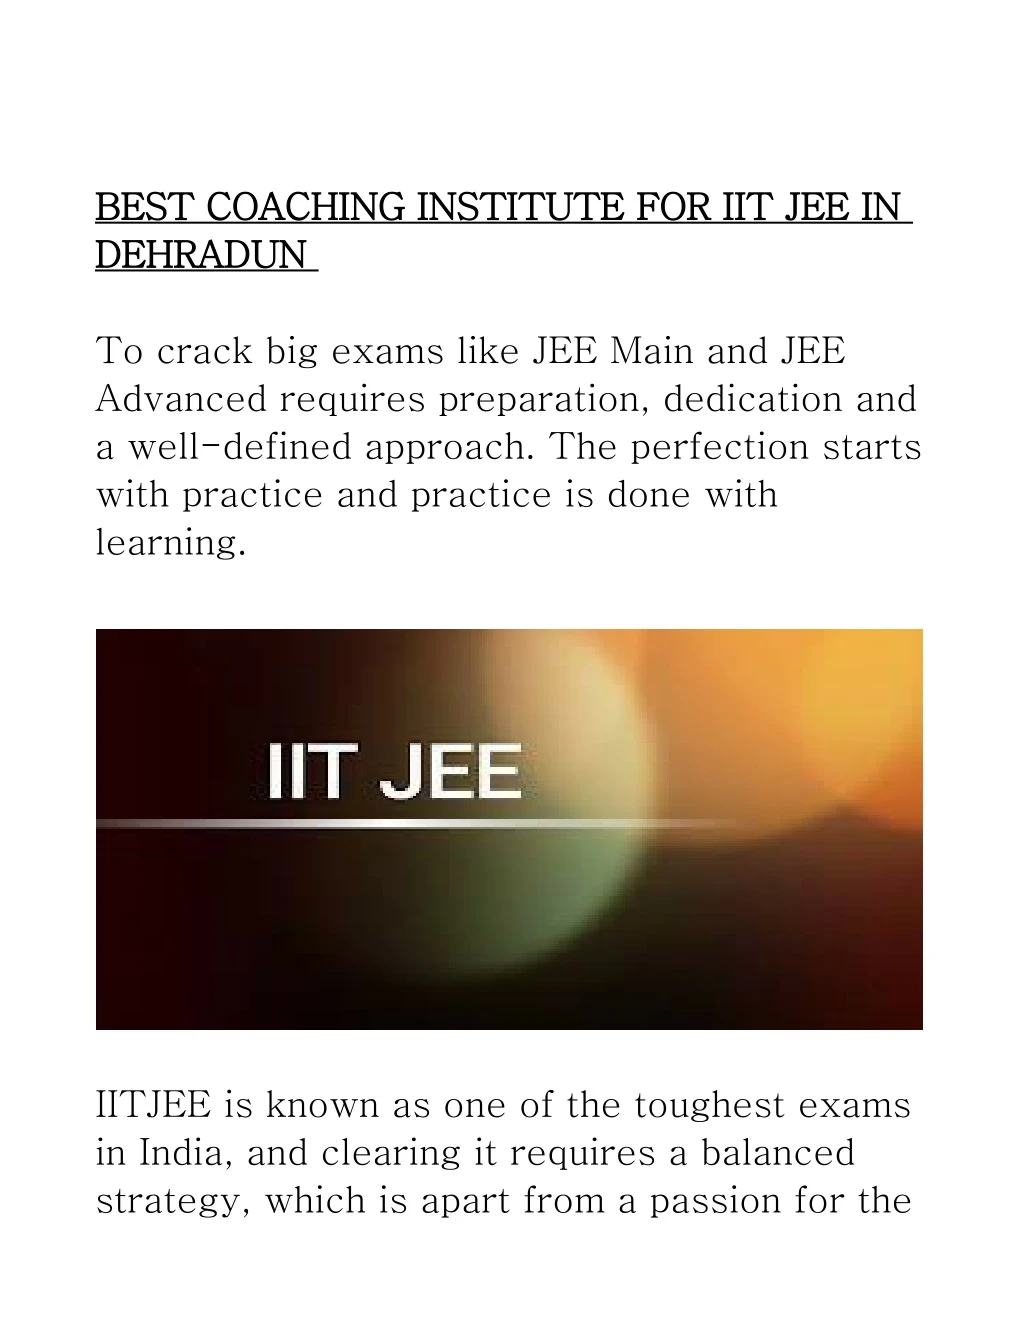 best coaching institute for iit jee in best